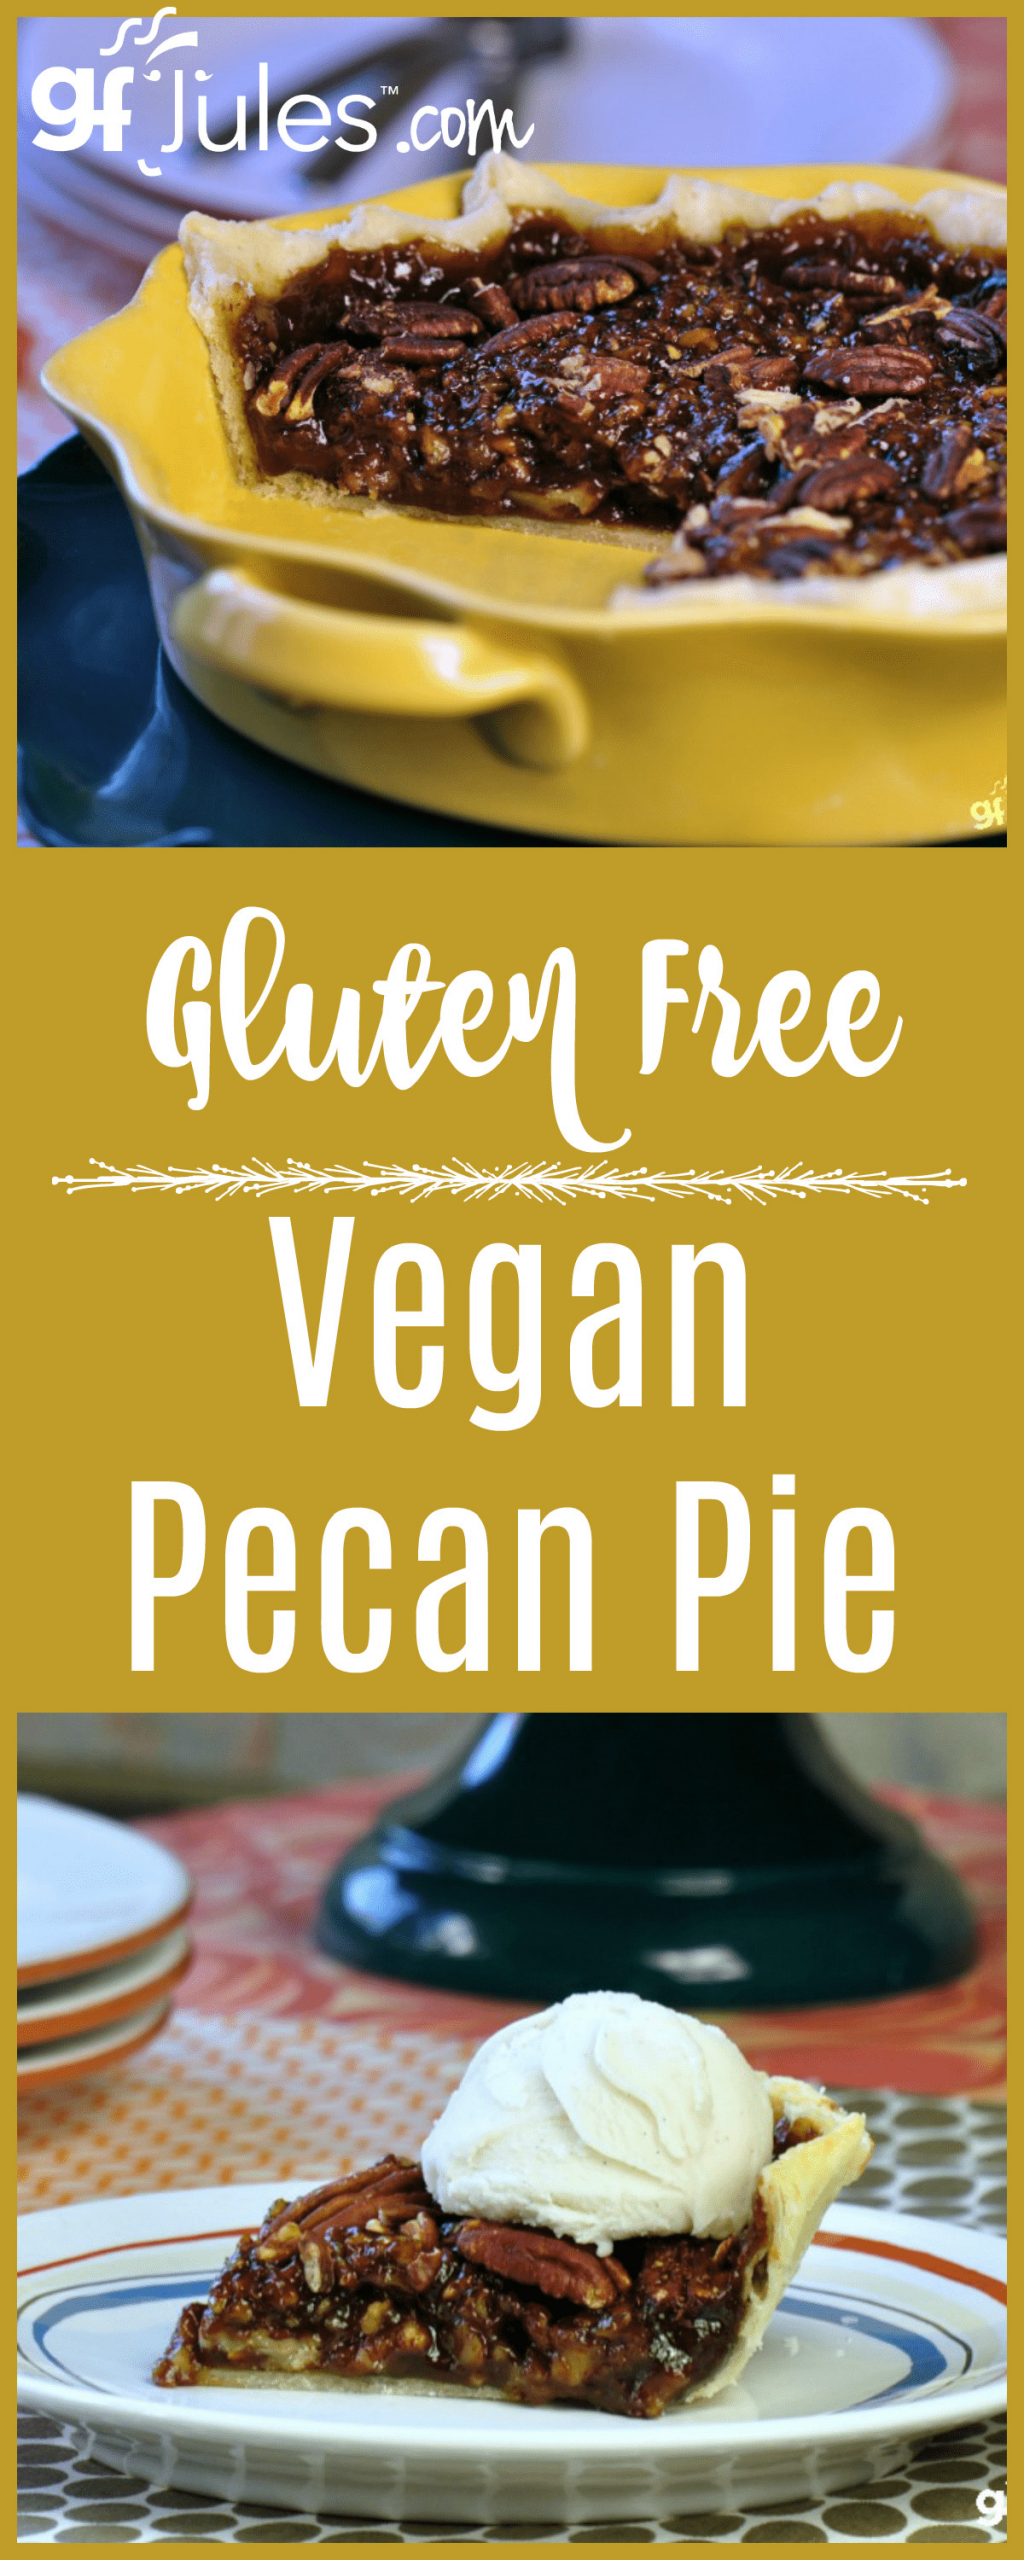 Gluten Free Pecan Pie
 Gluten Free Vegan Pecan Pie Recipe holiday recipes gfJules